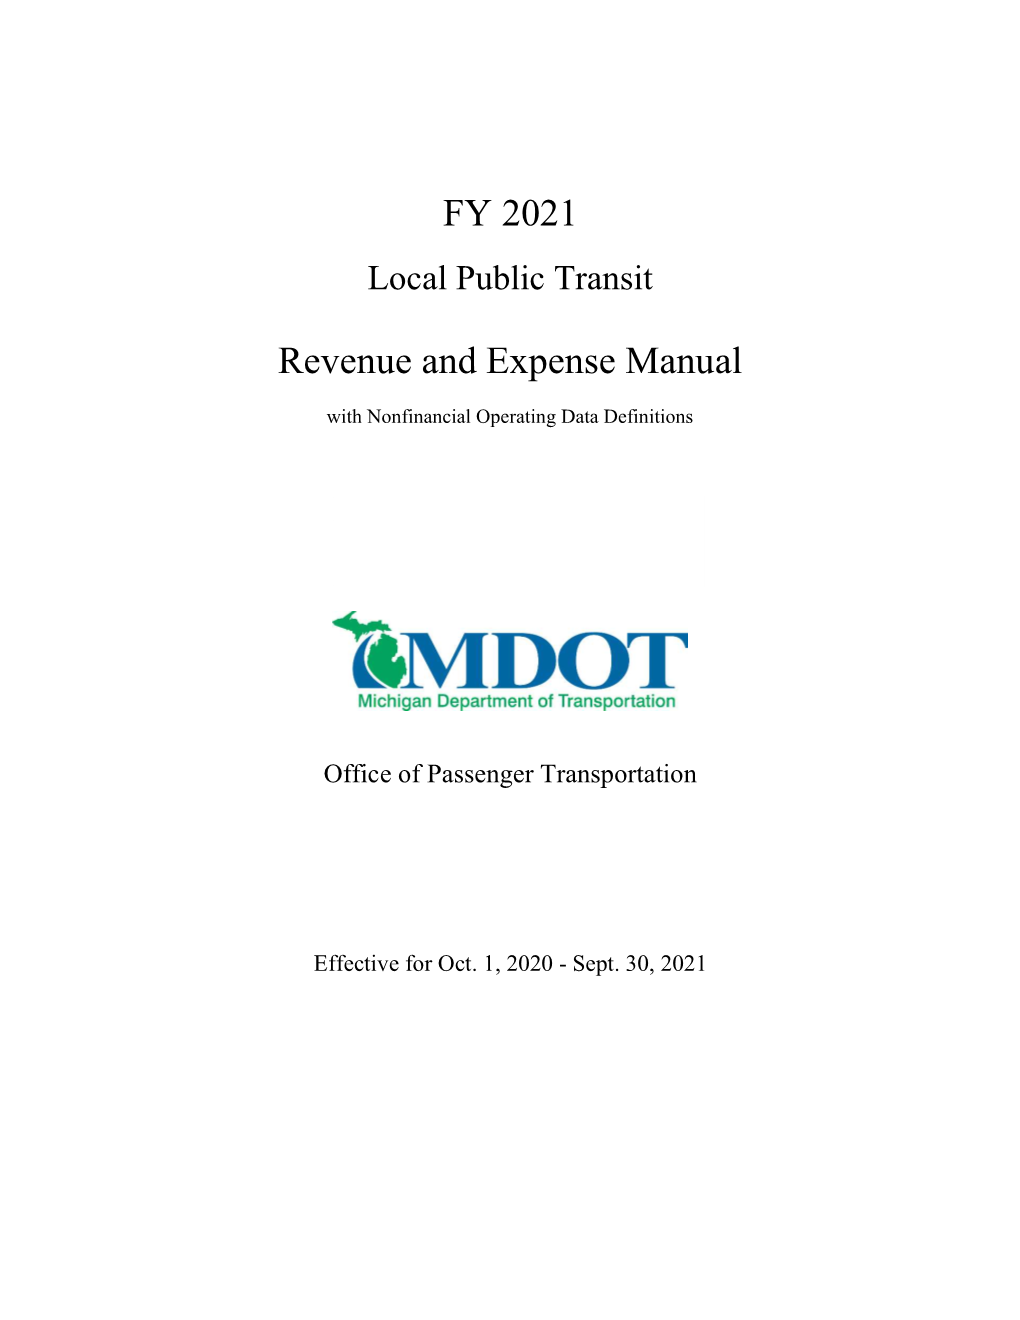 FY 2021 Michigan Local Public Transit Revenue and Expense Manual